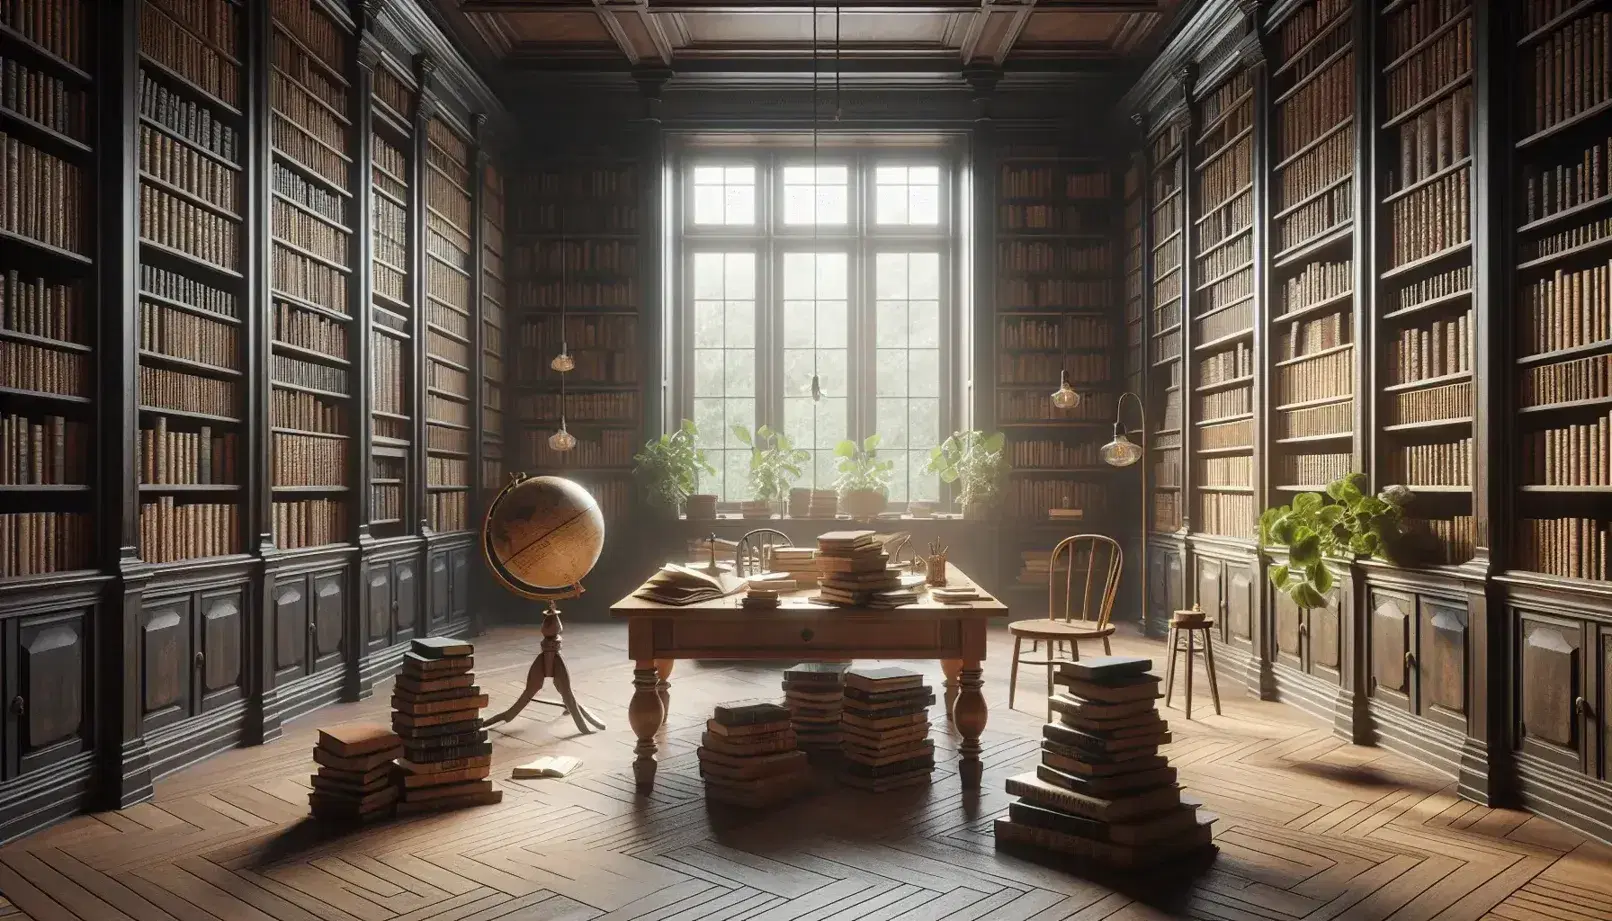 Biblioteca espaciosa con estanterías de madera oscura llenas de libros, mesa central con libros abiertos, ventana grande y globo terráqueo antiguo.